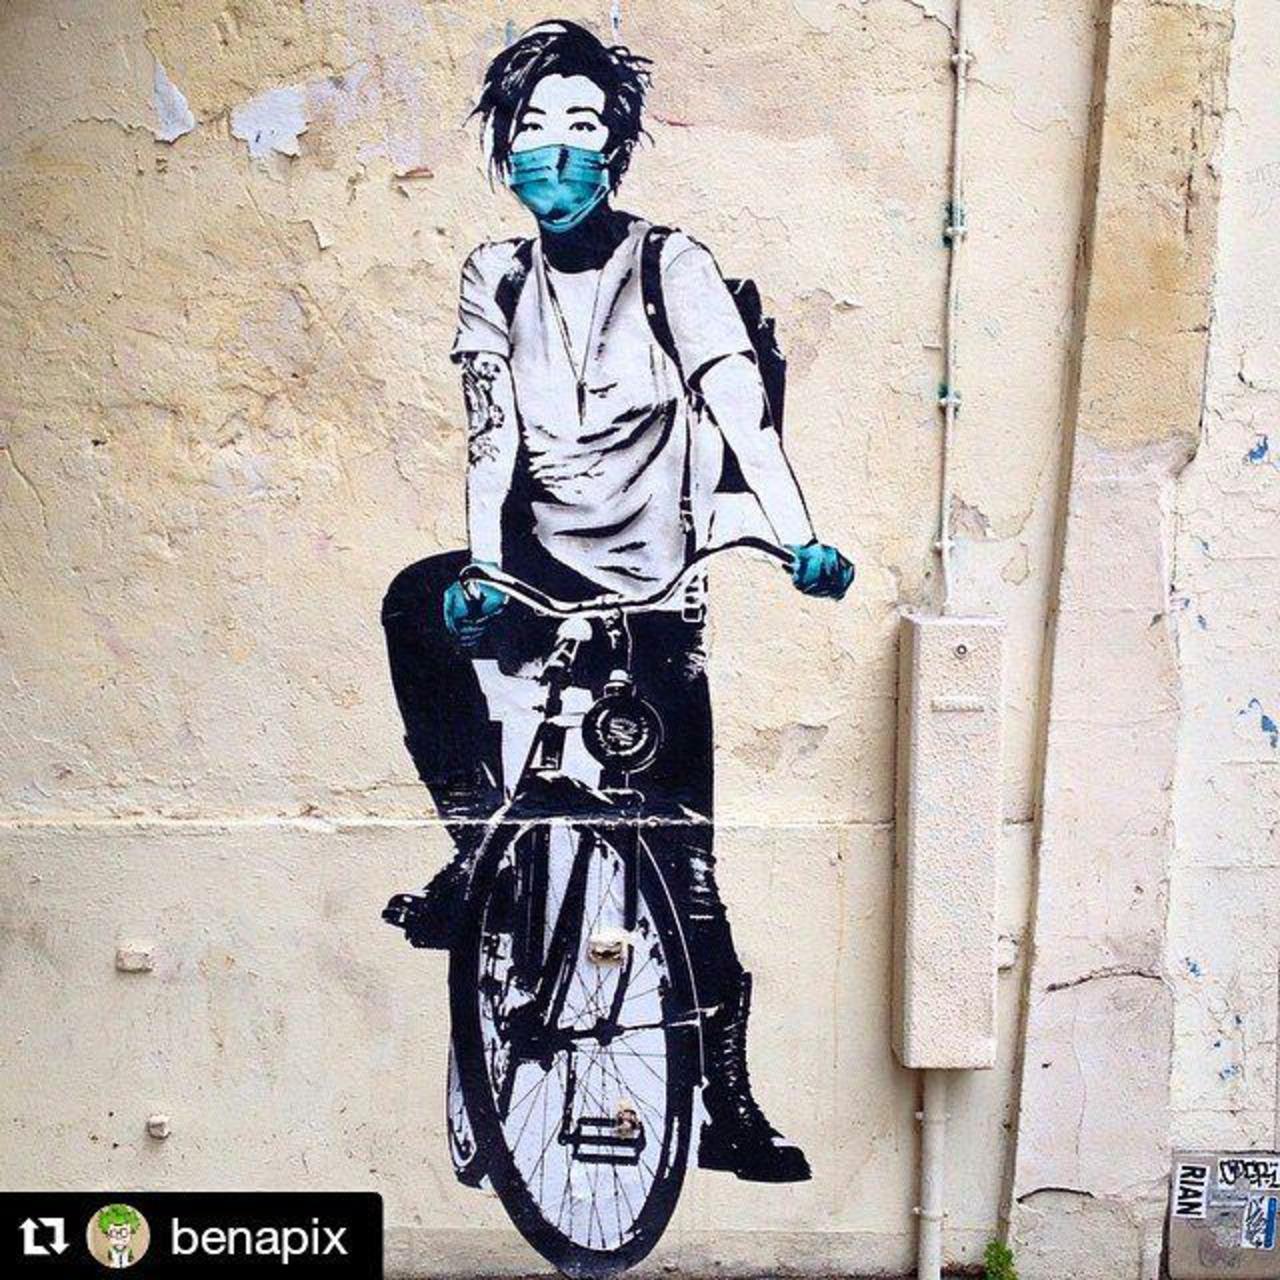 #Paris #graffiti photo by @senyorerre http://ift.tt/1jBdlwx #StreetArt http://t.co/72eYJh5wo1